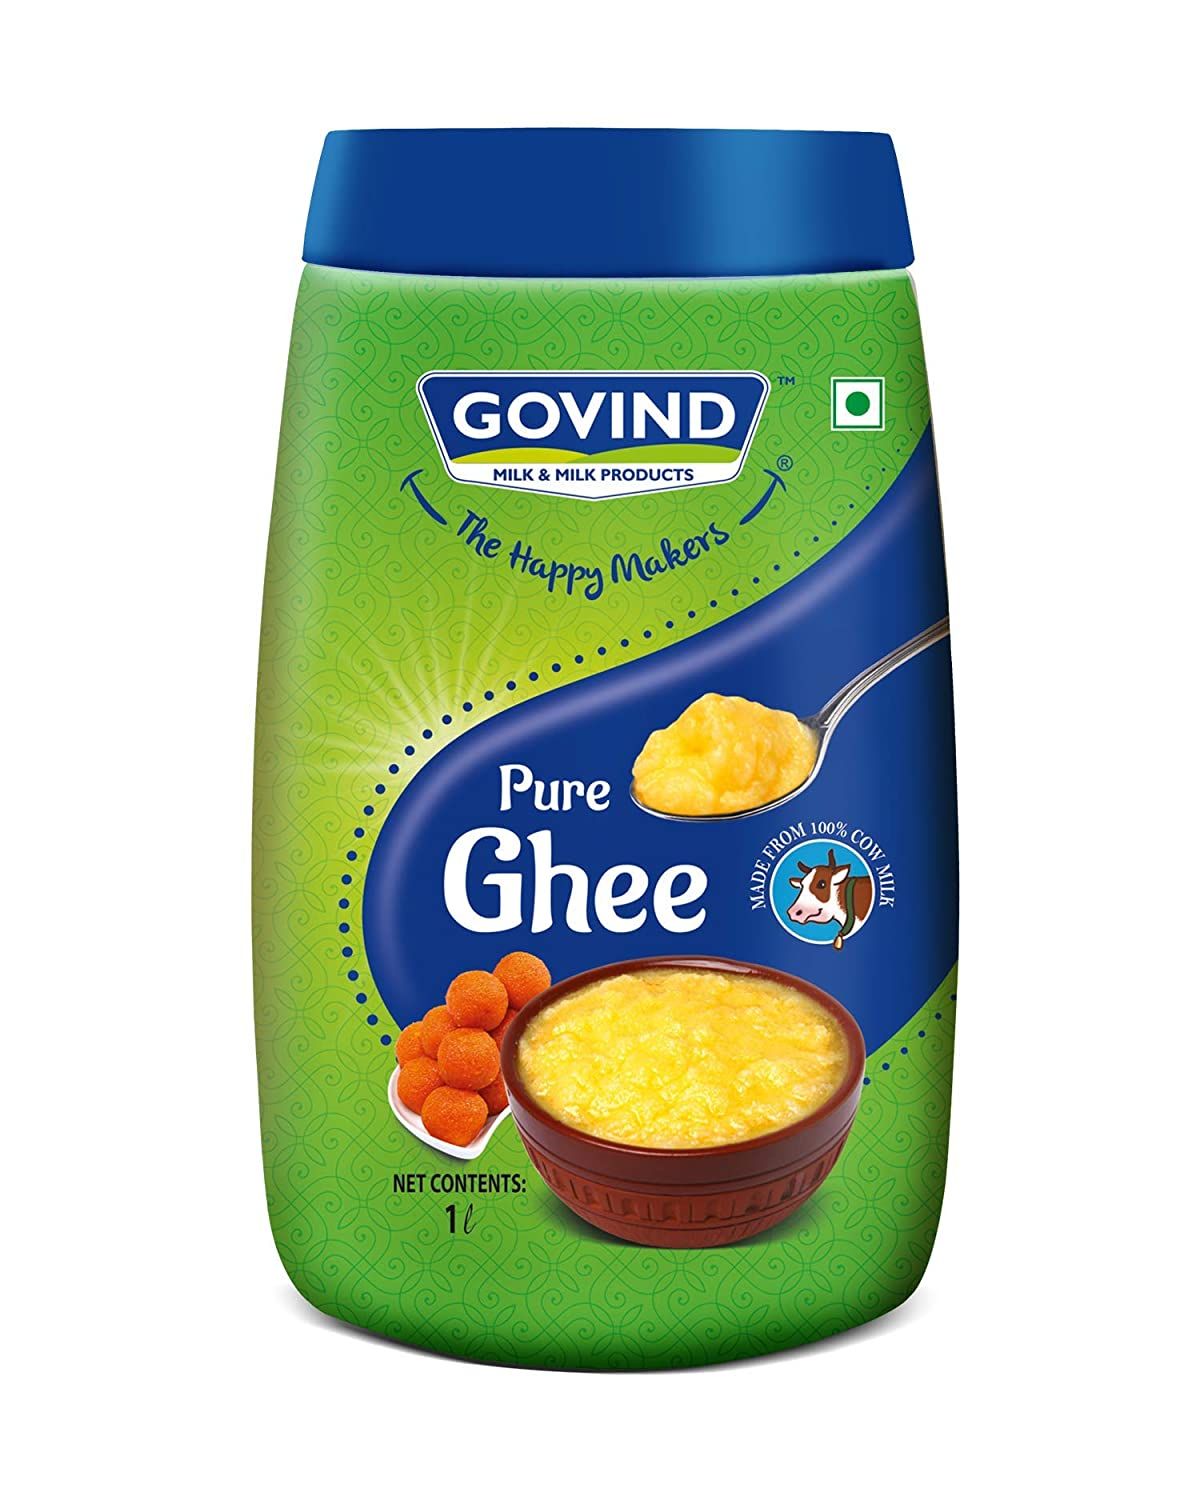 Govind Milk & Milk Products Cow Ghee Image